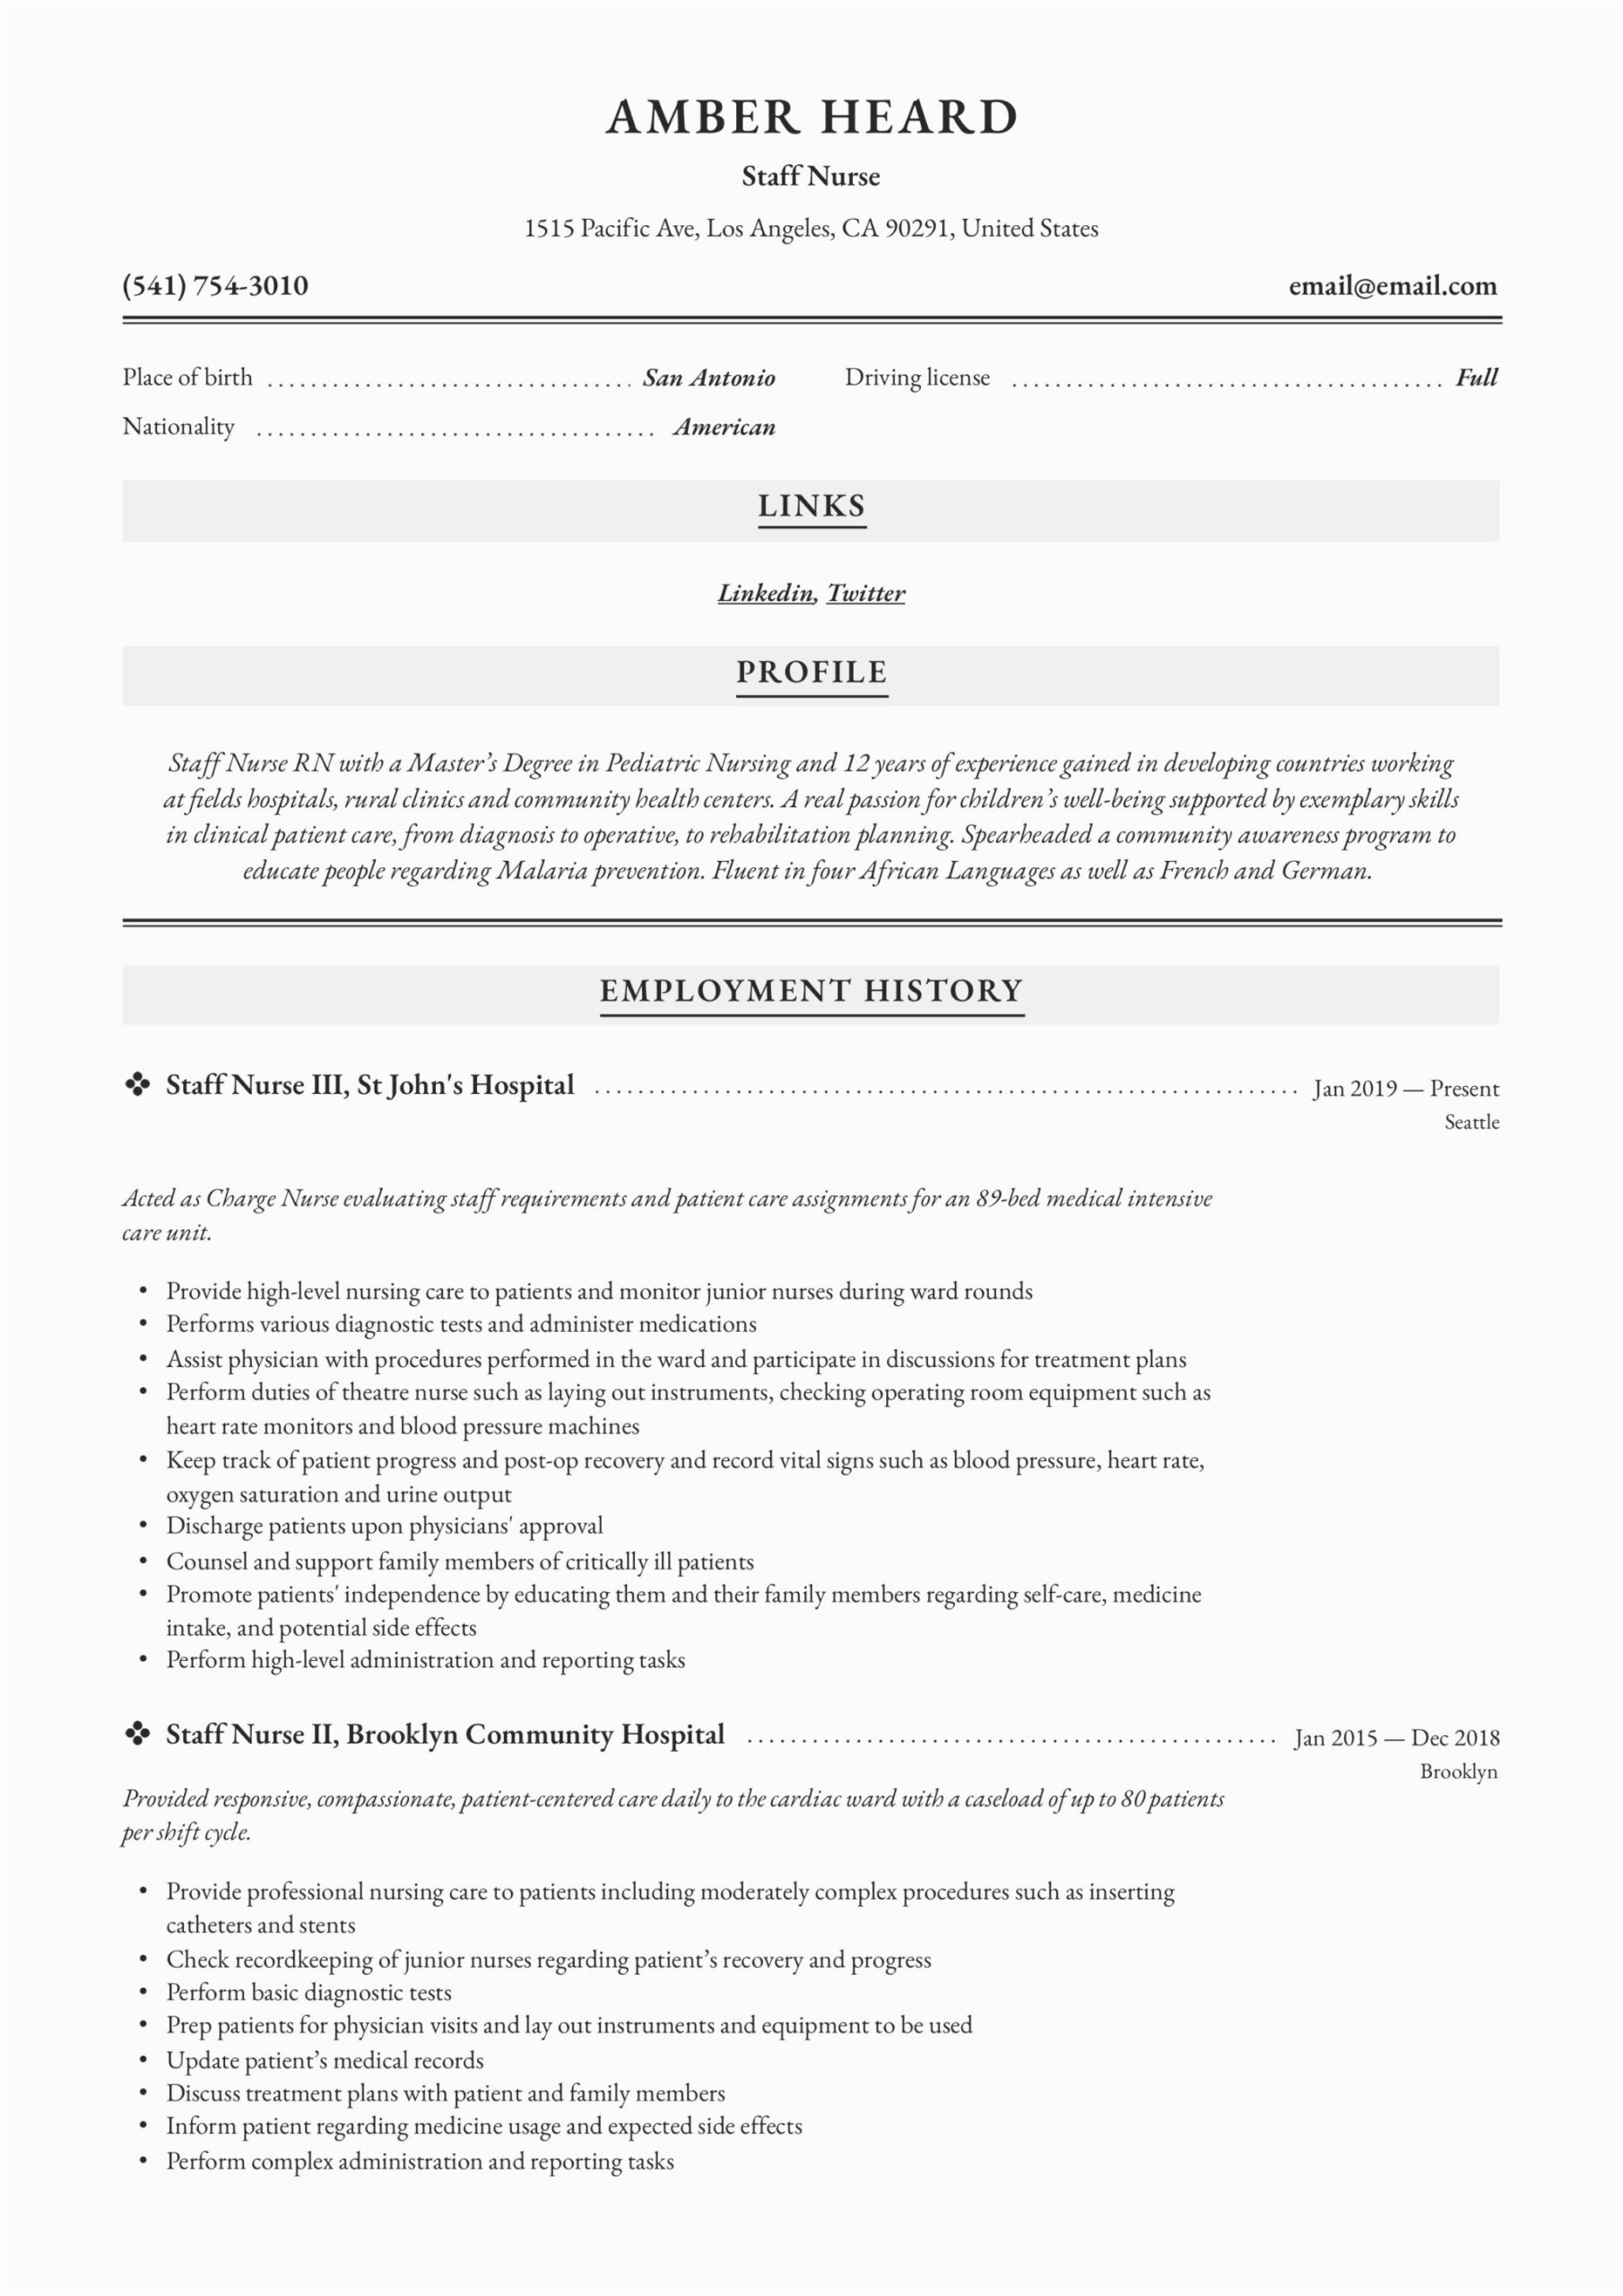 Sample Resume format for Staff Nurses Staff Nurse Resume & Writing Guide 12 Templates In Pdf & Jpg